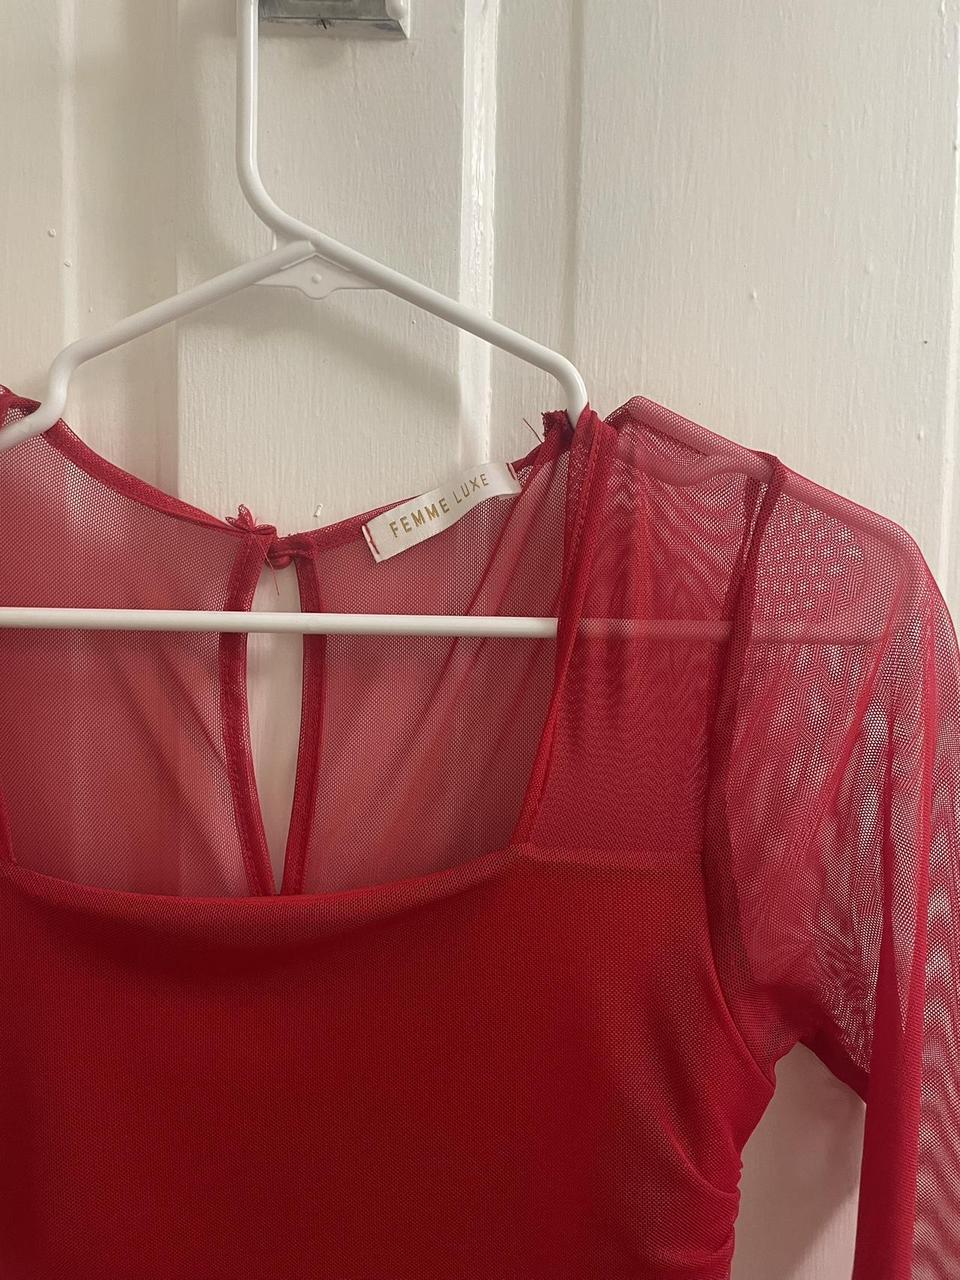 Femme Luxe Women's Red Dress (2)